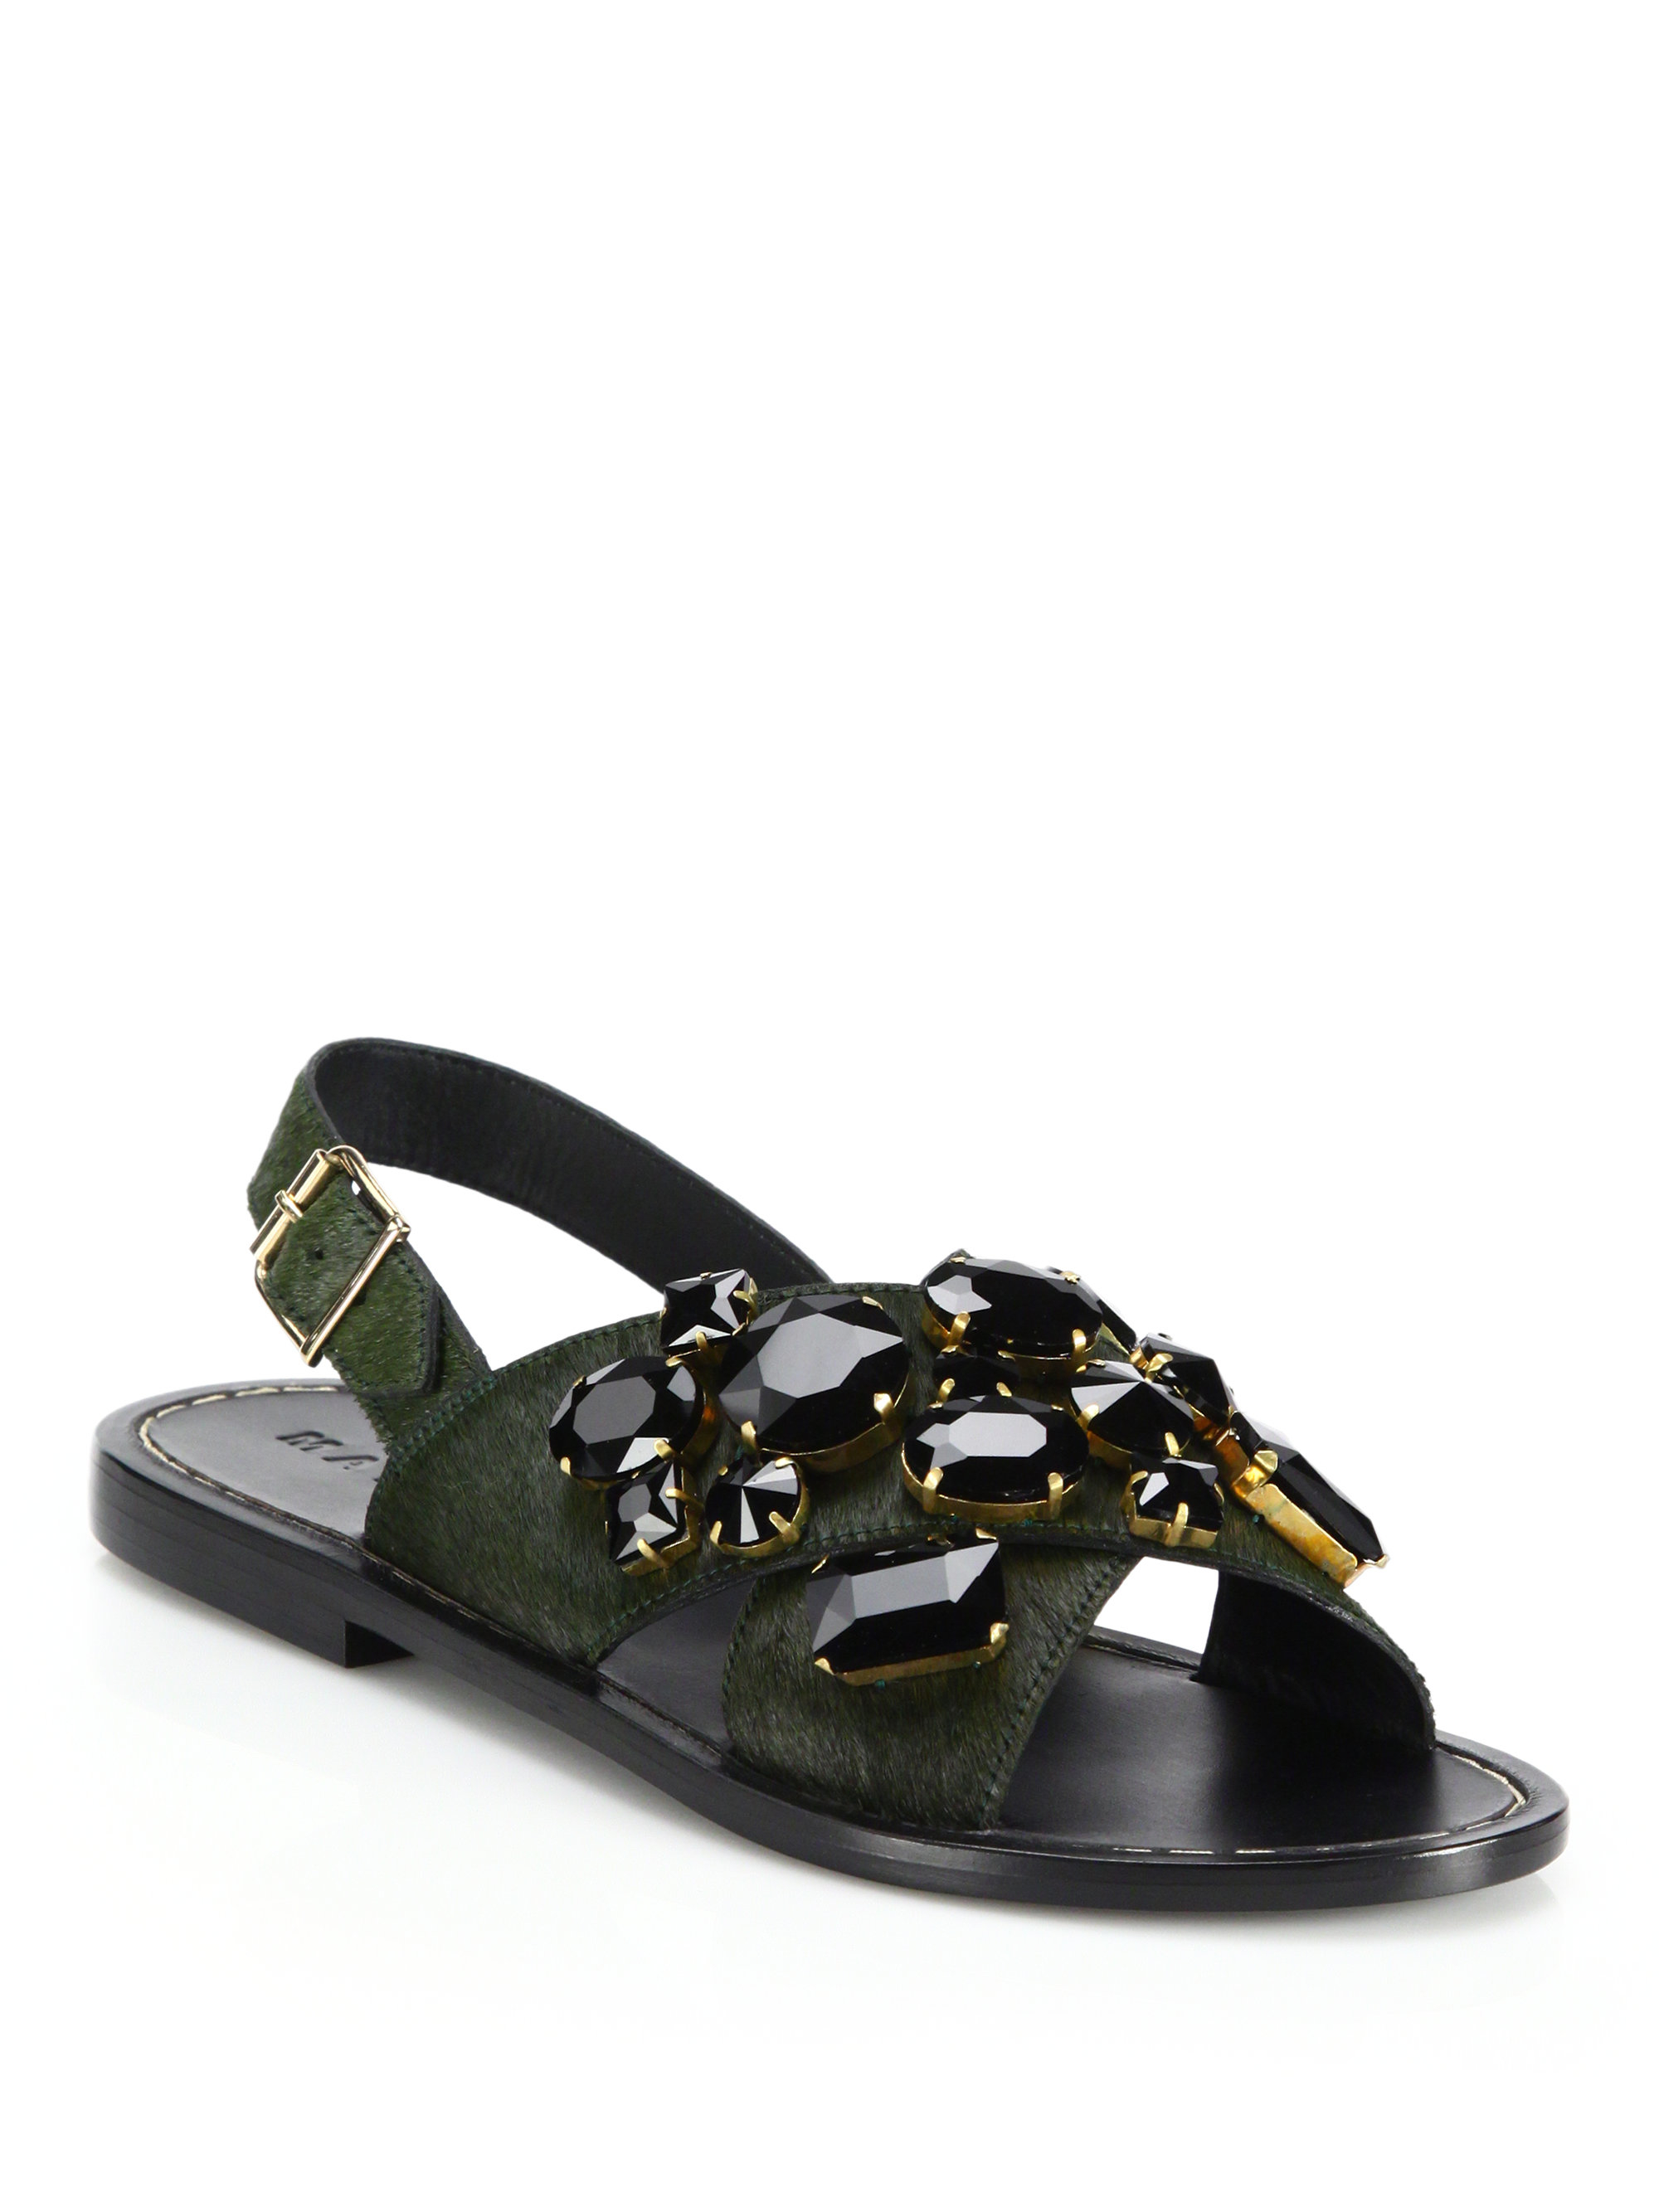 Lyst - Marni Jeweled Calf Hair Crisscross Sandals in Green